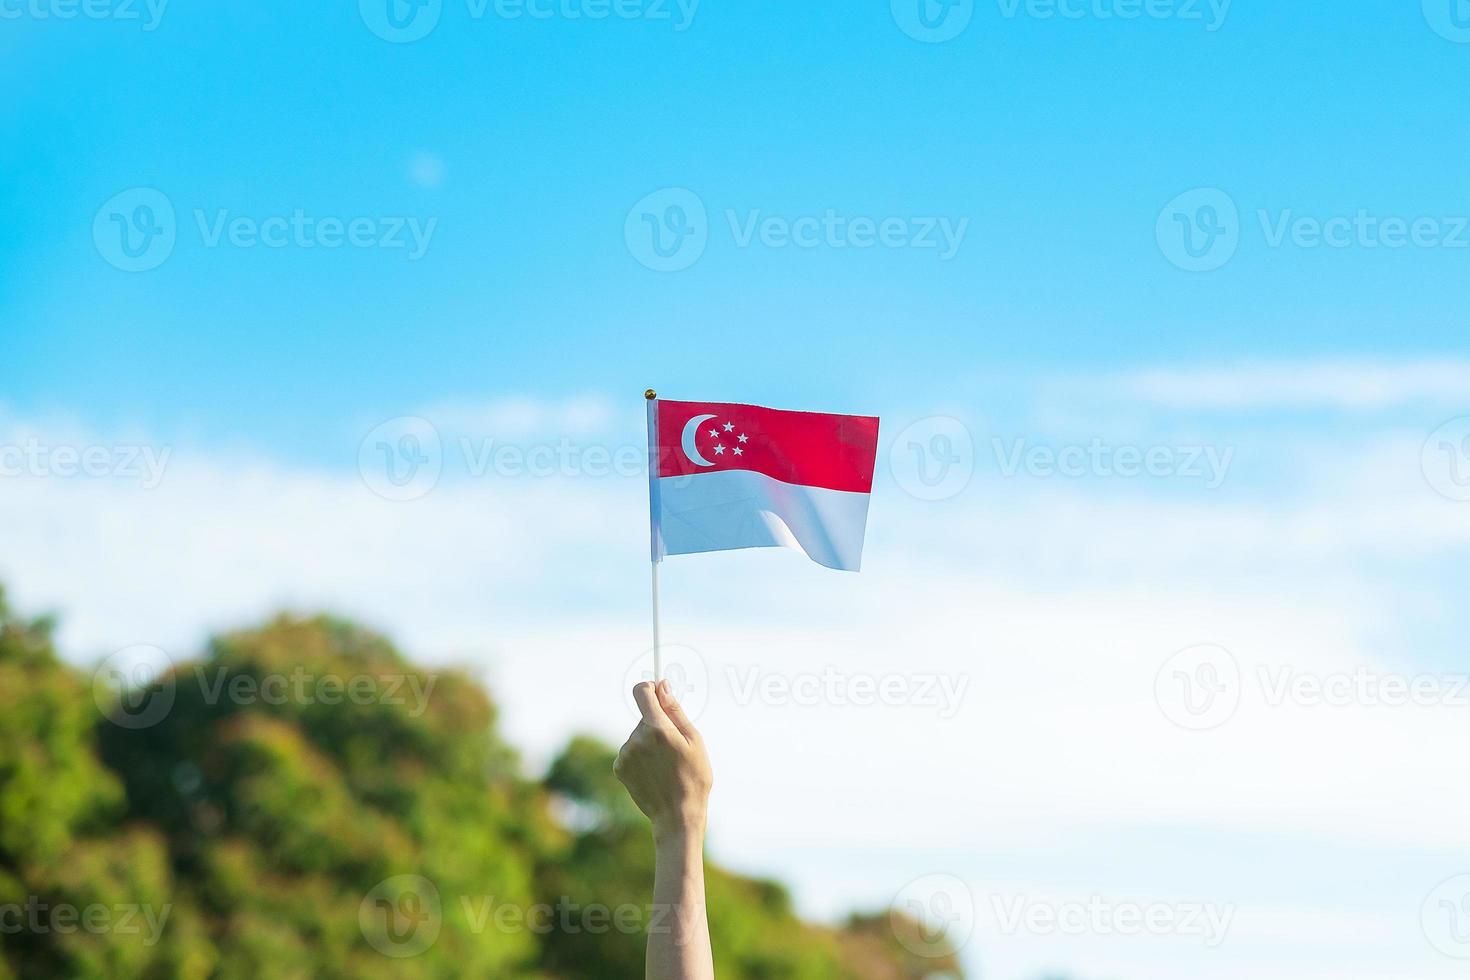 hand met singapore vlag op blauwe hemelachtergrond. Singapore nationale feestdag en gelukkige vieringsconcepten foto